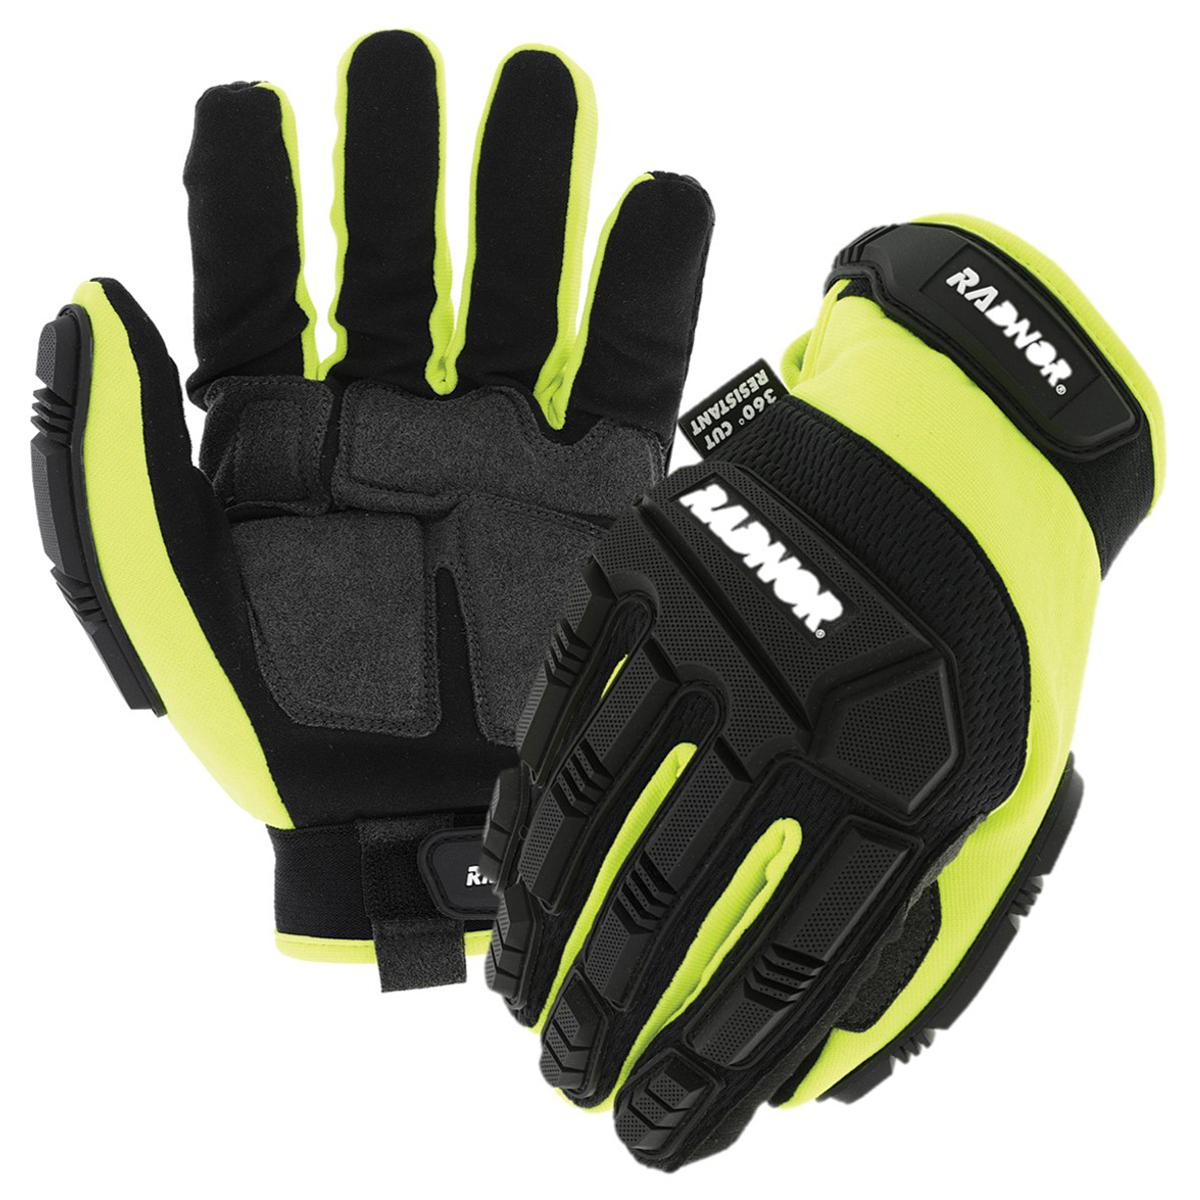 Airgas - RAD64056912 - RADNOR™ Medium 13 Gauge DuPont™ Kevlar® And LYCRA®  Cut Resistant Gloves With Nitrile Coated Palm & Fingers